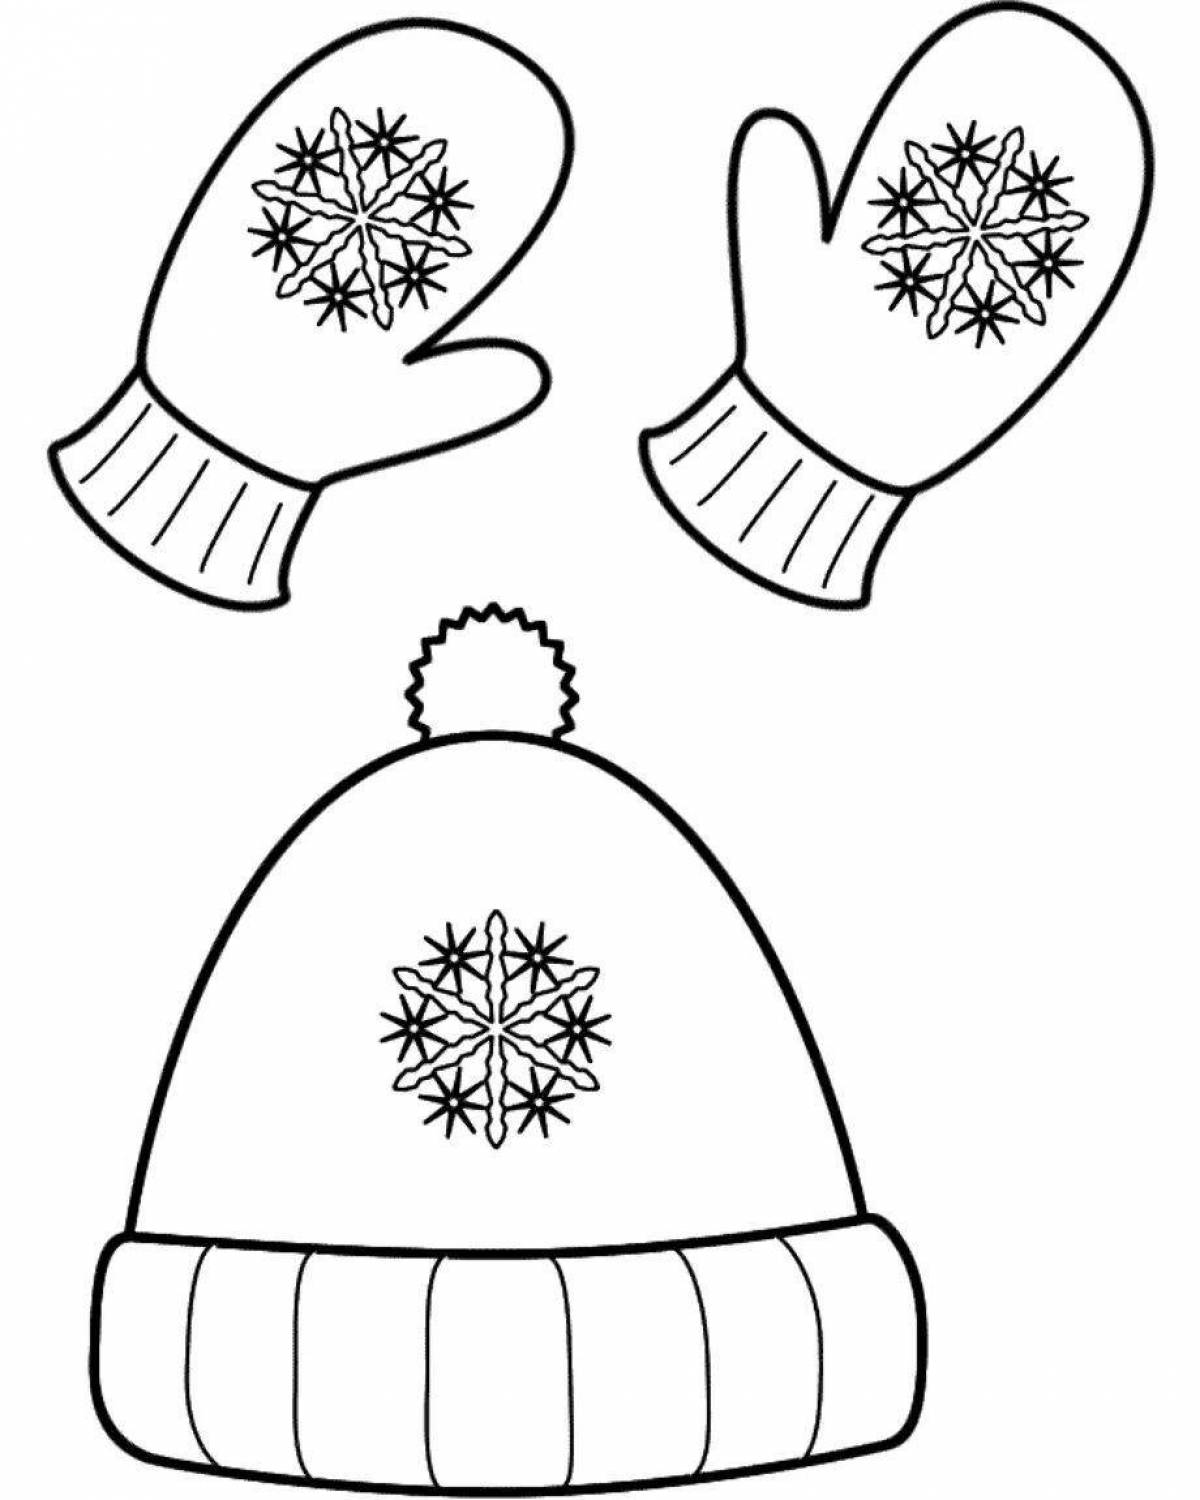 Adorable winter clothes coloring book for preschoolers